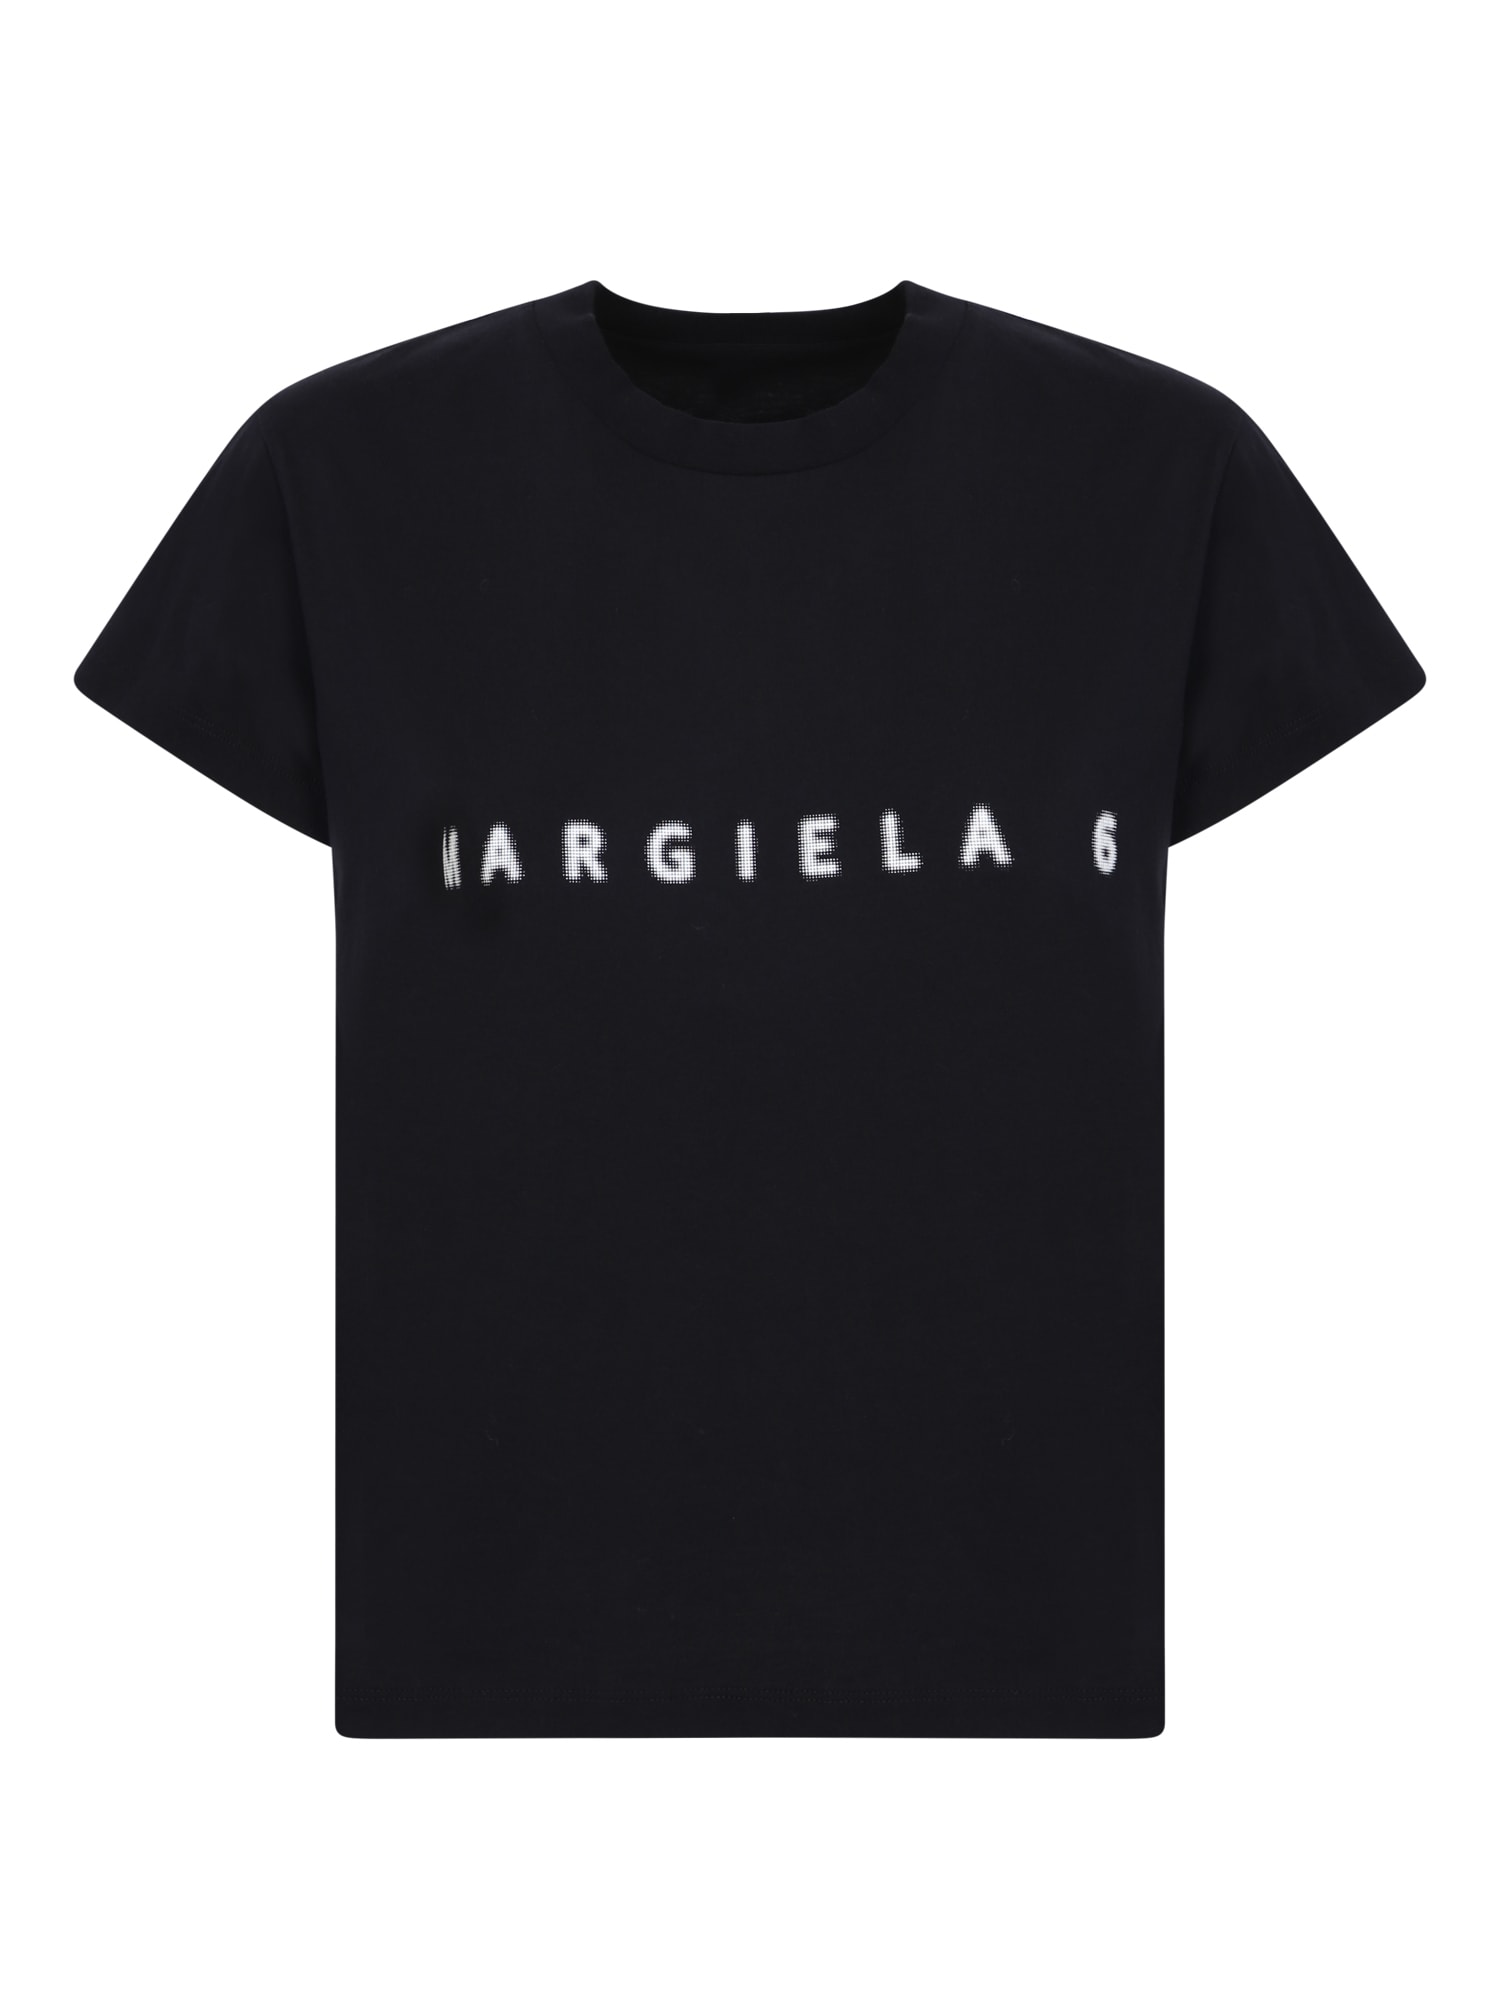 MM6 Maison Margiela Black T-shirt